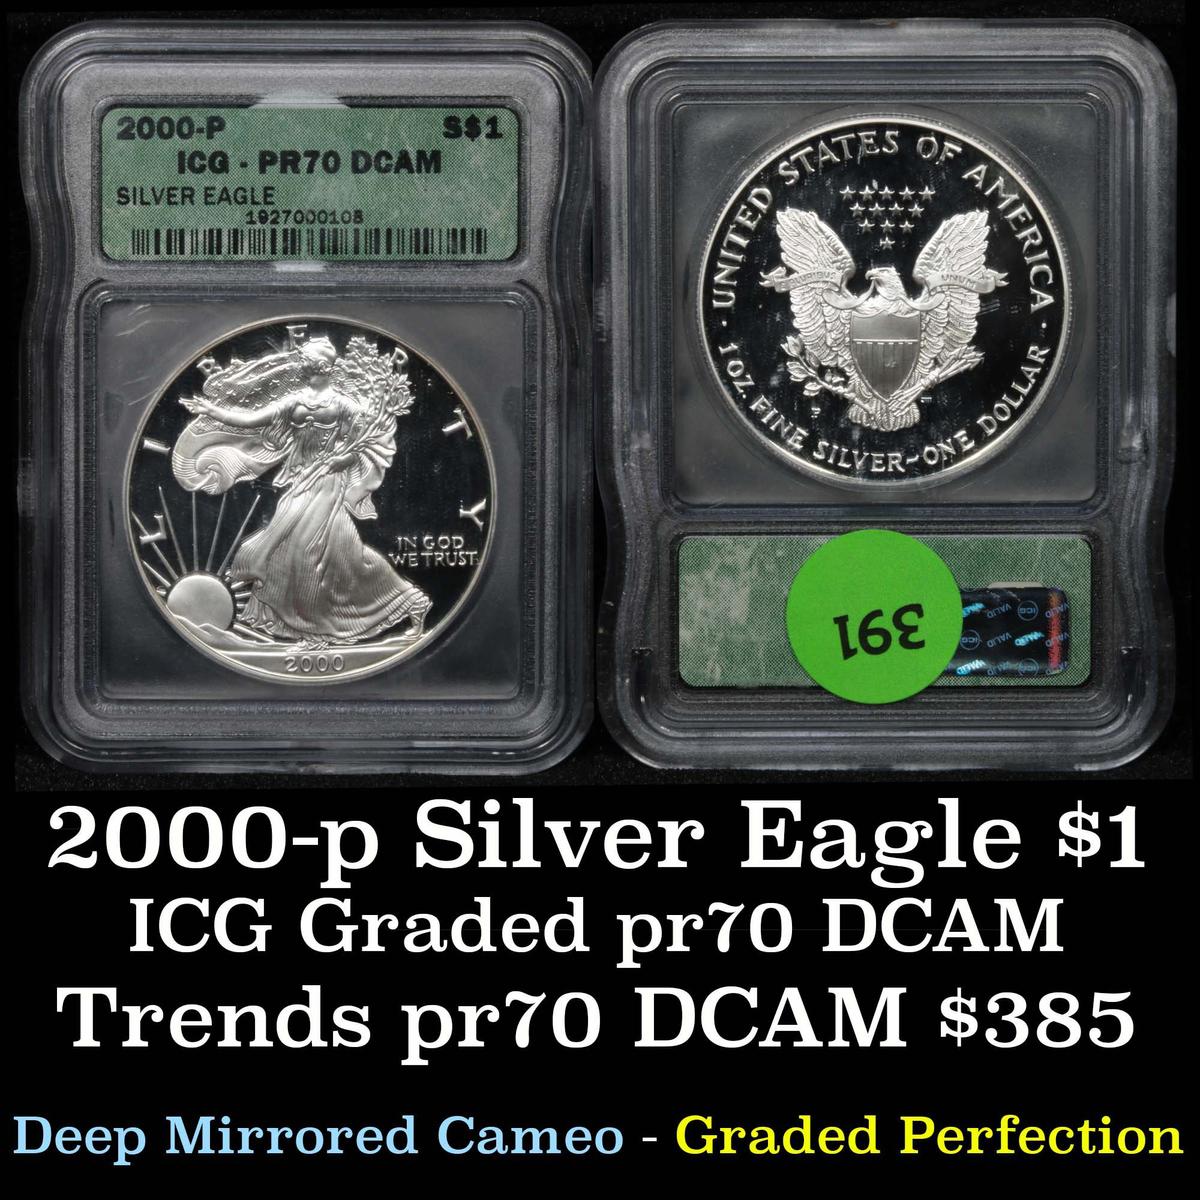 2000-p Silver Eagle Dollar $1 Graded pr70 DCAM By ICG